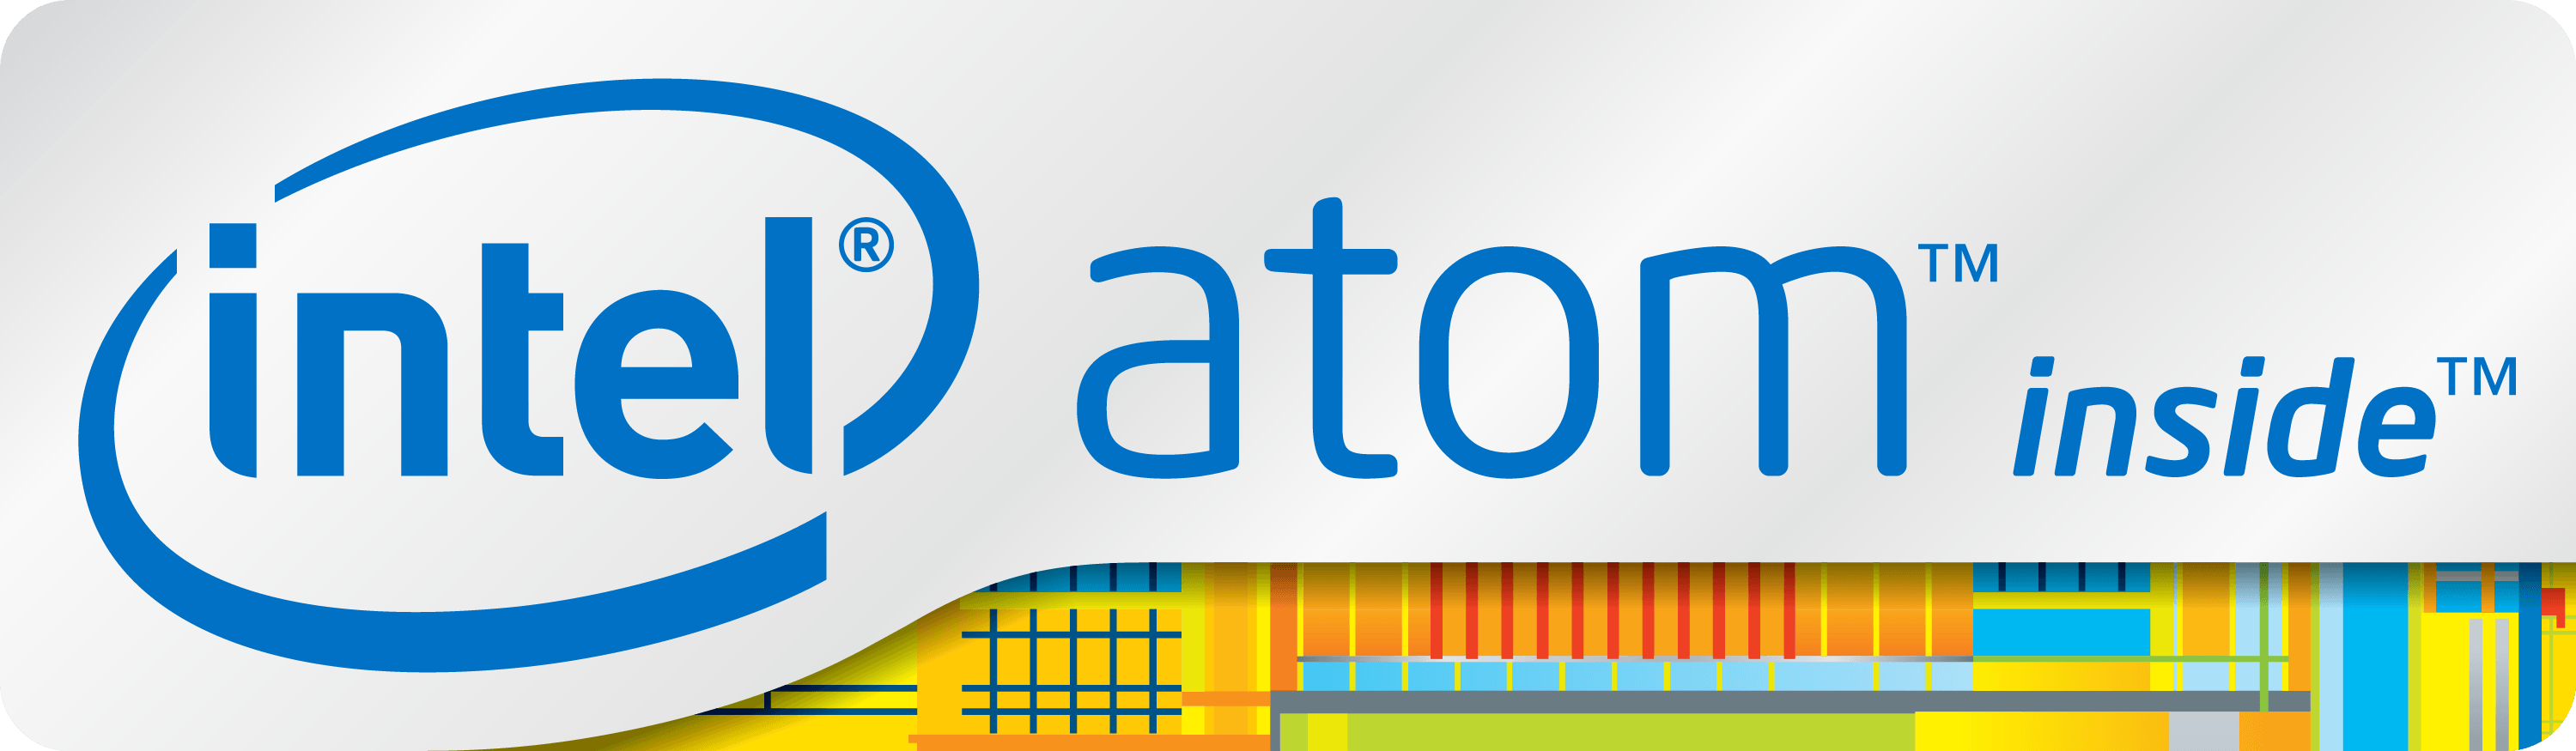 Intel Atom Logo - Intel Atom